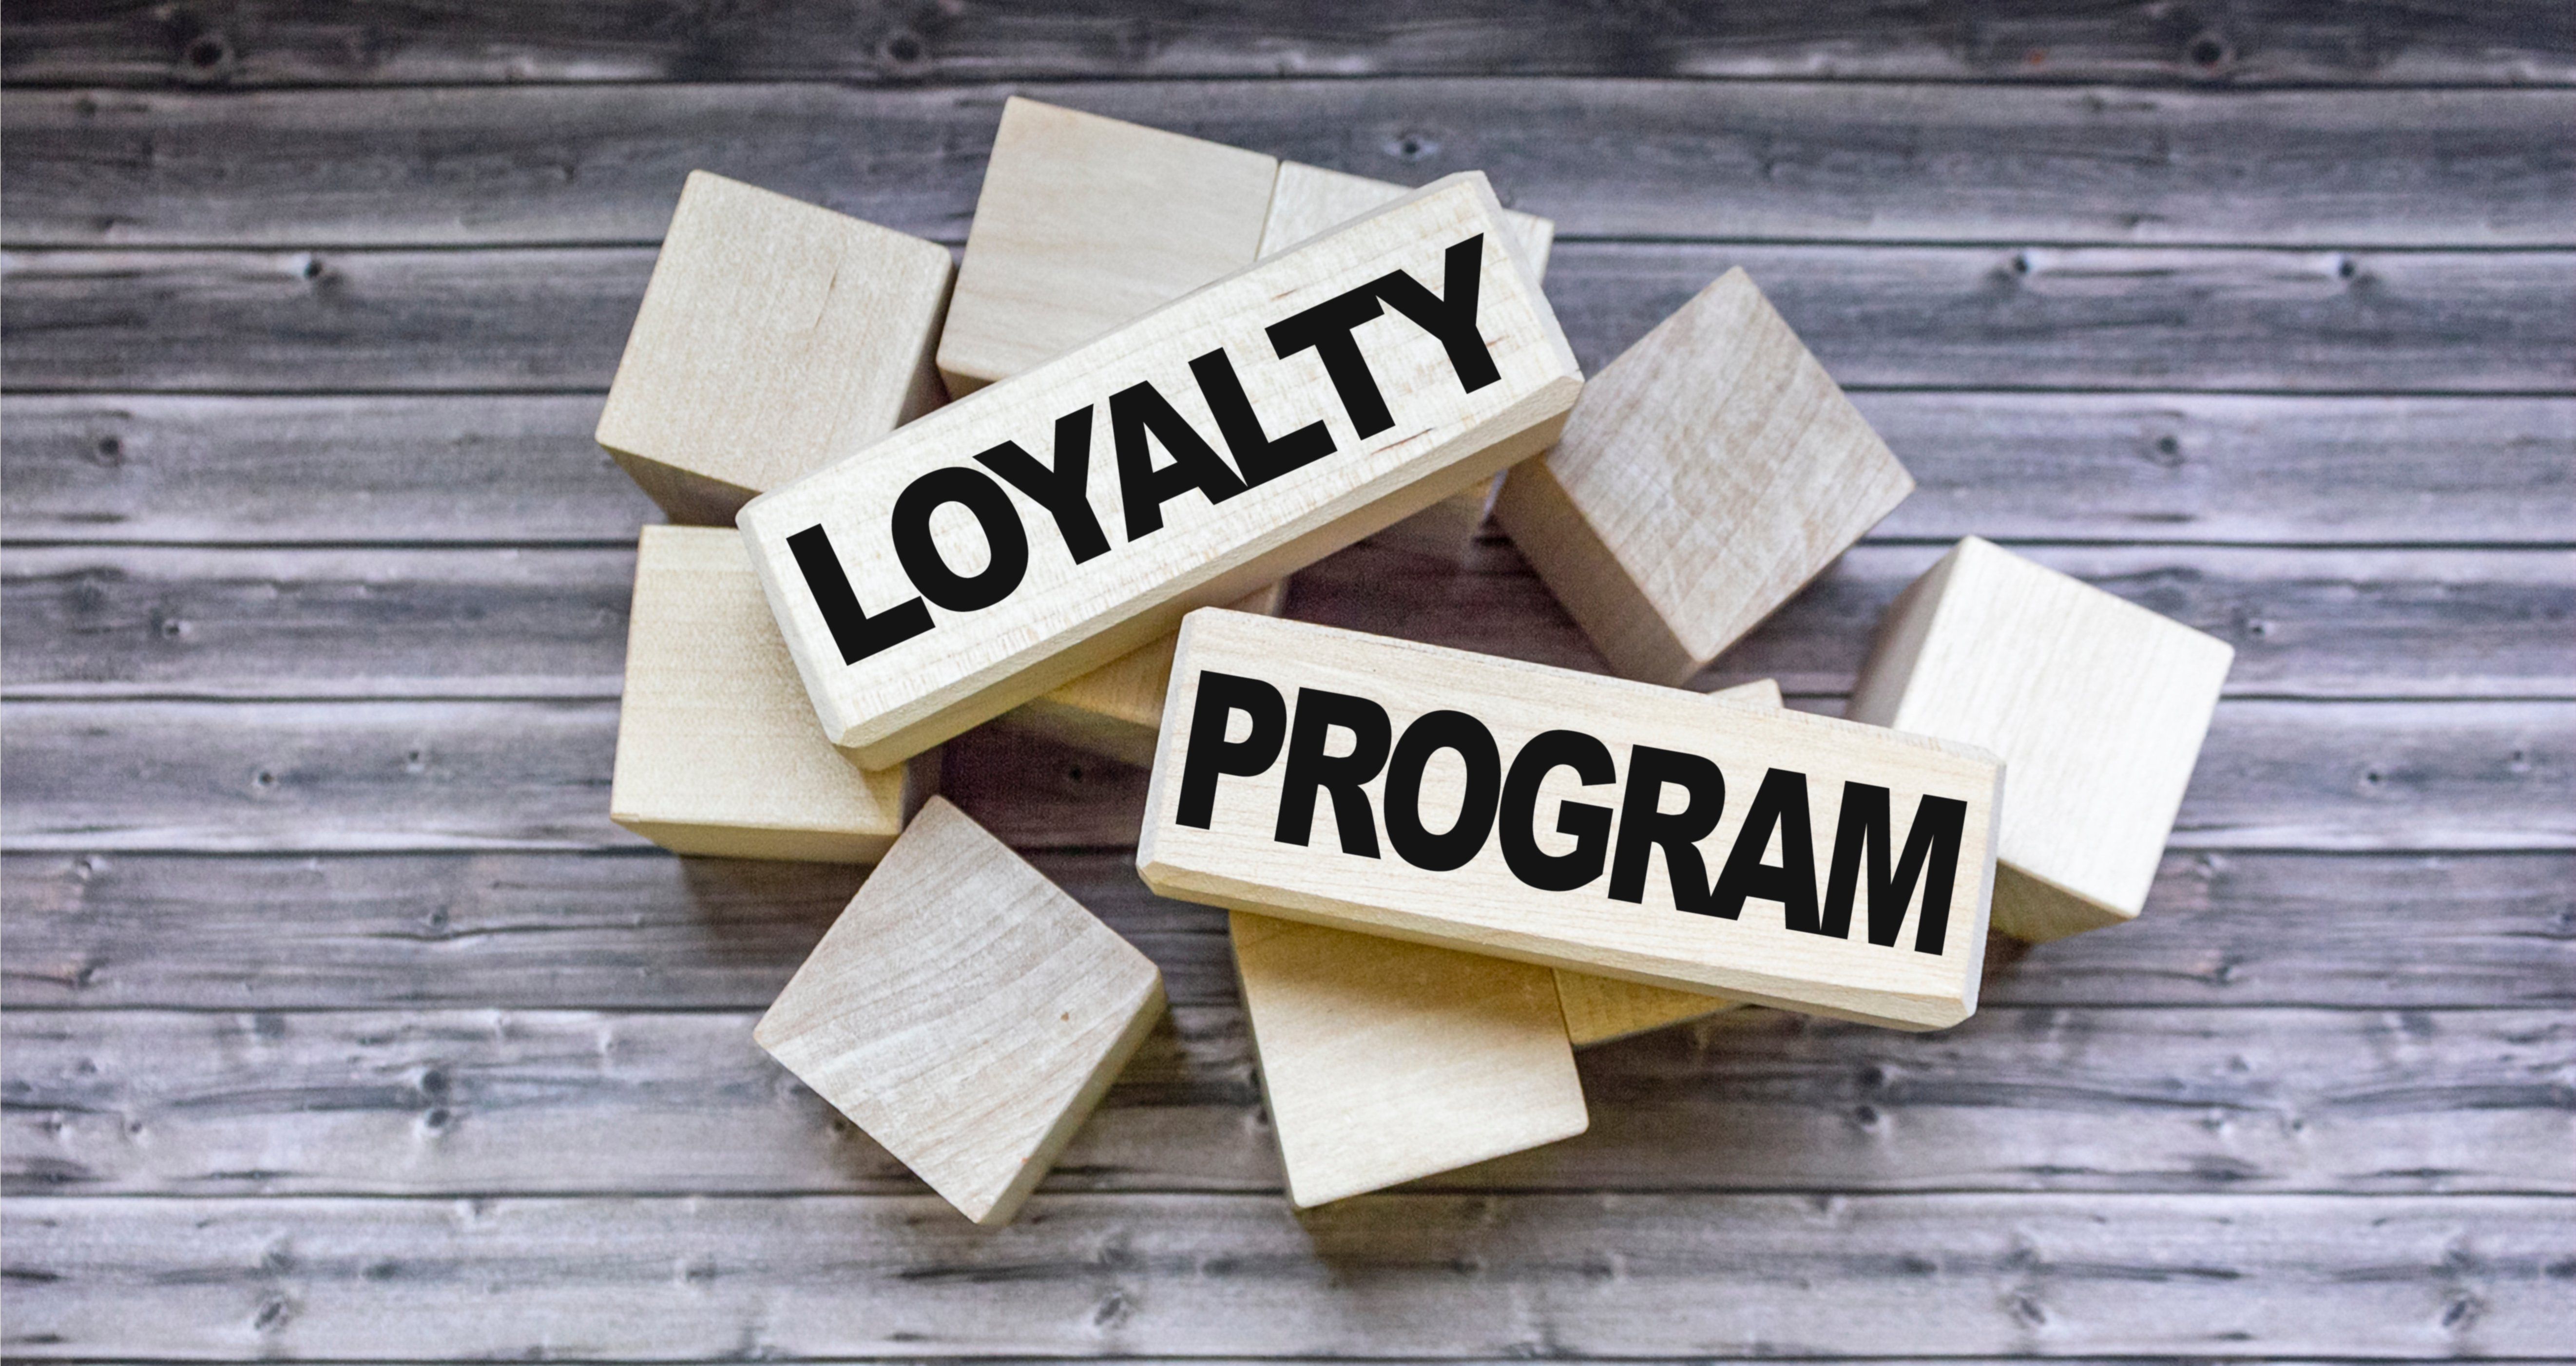 Loyalty rewards programs